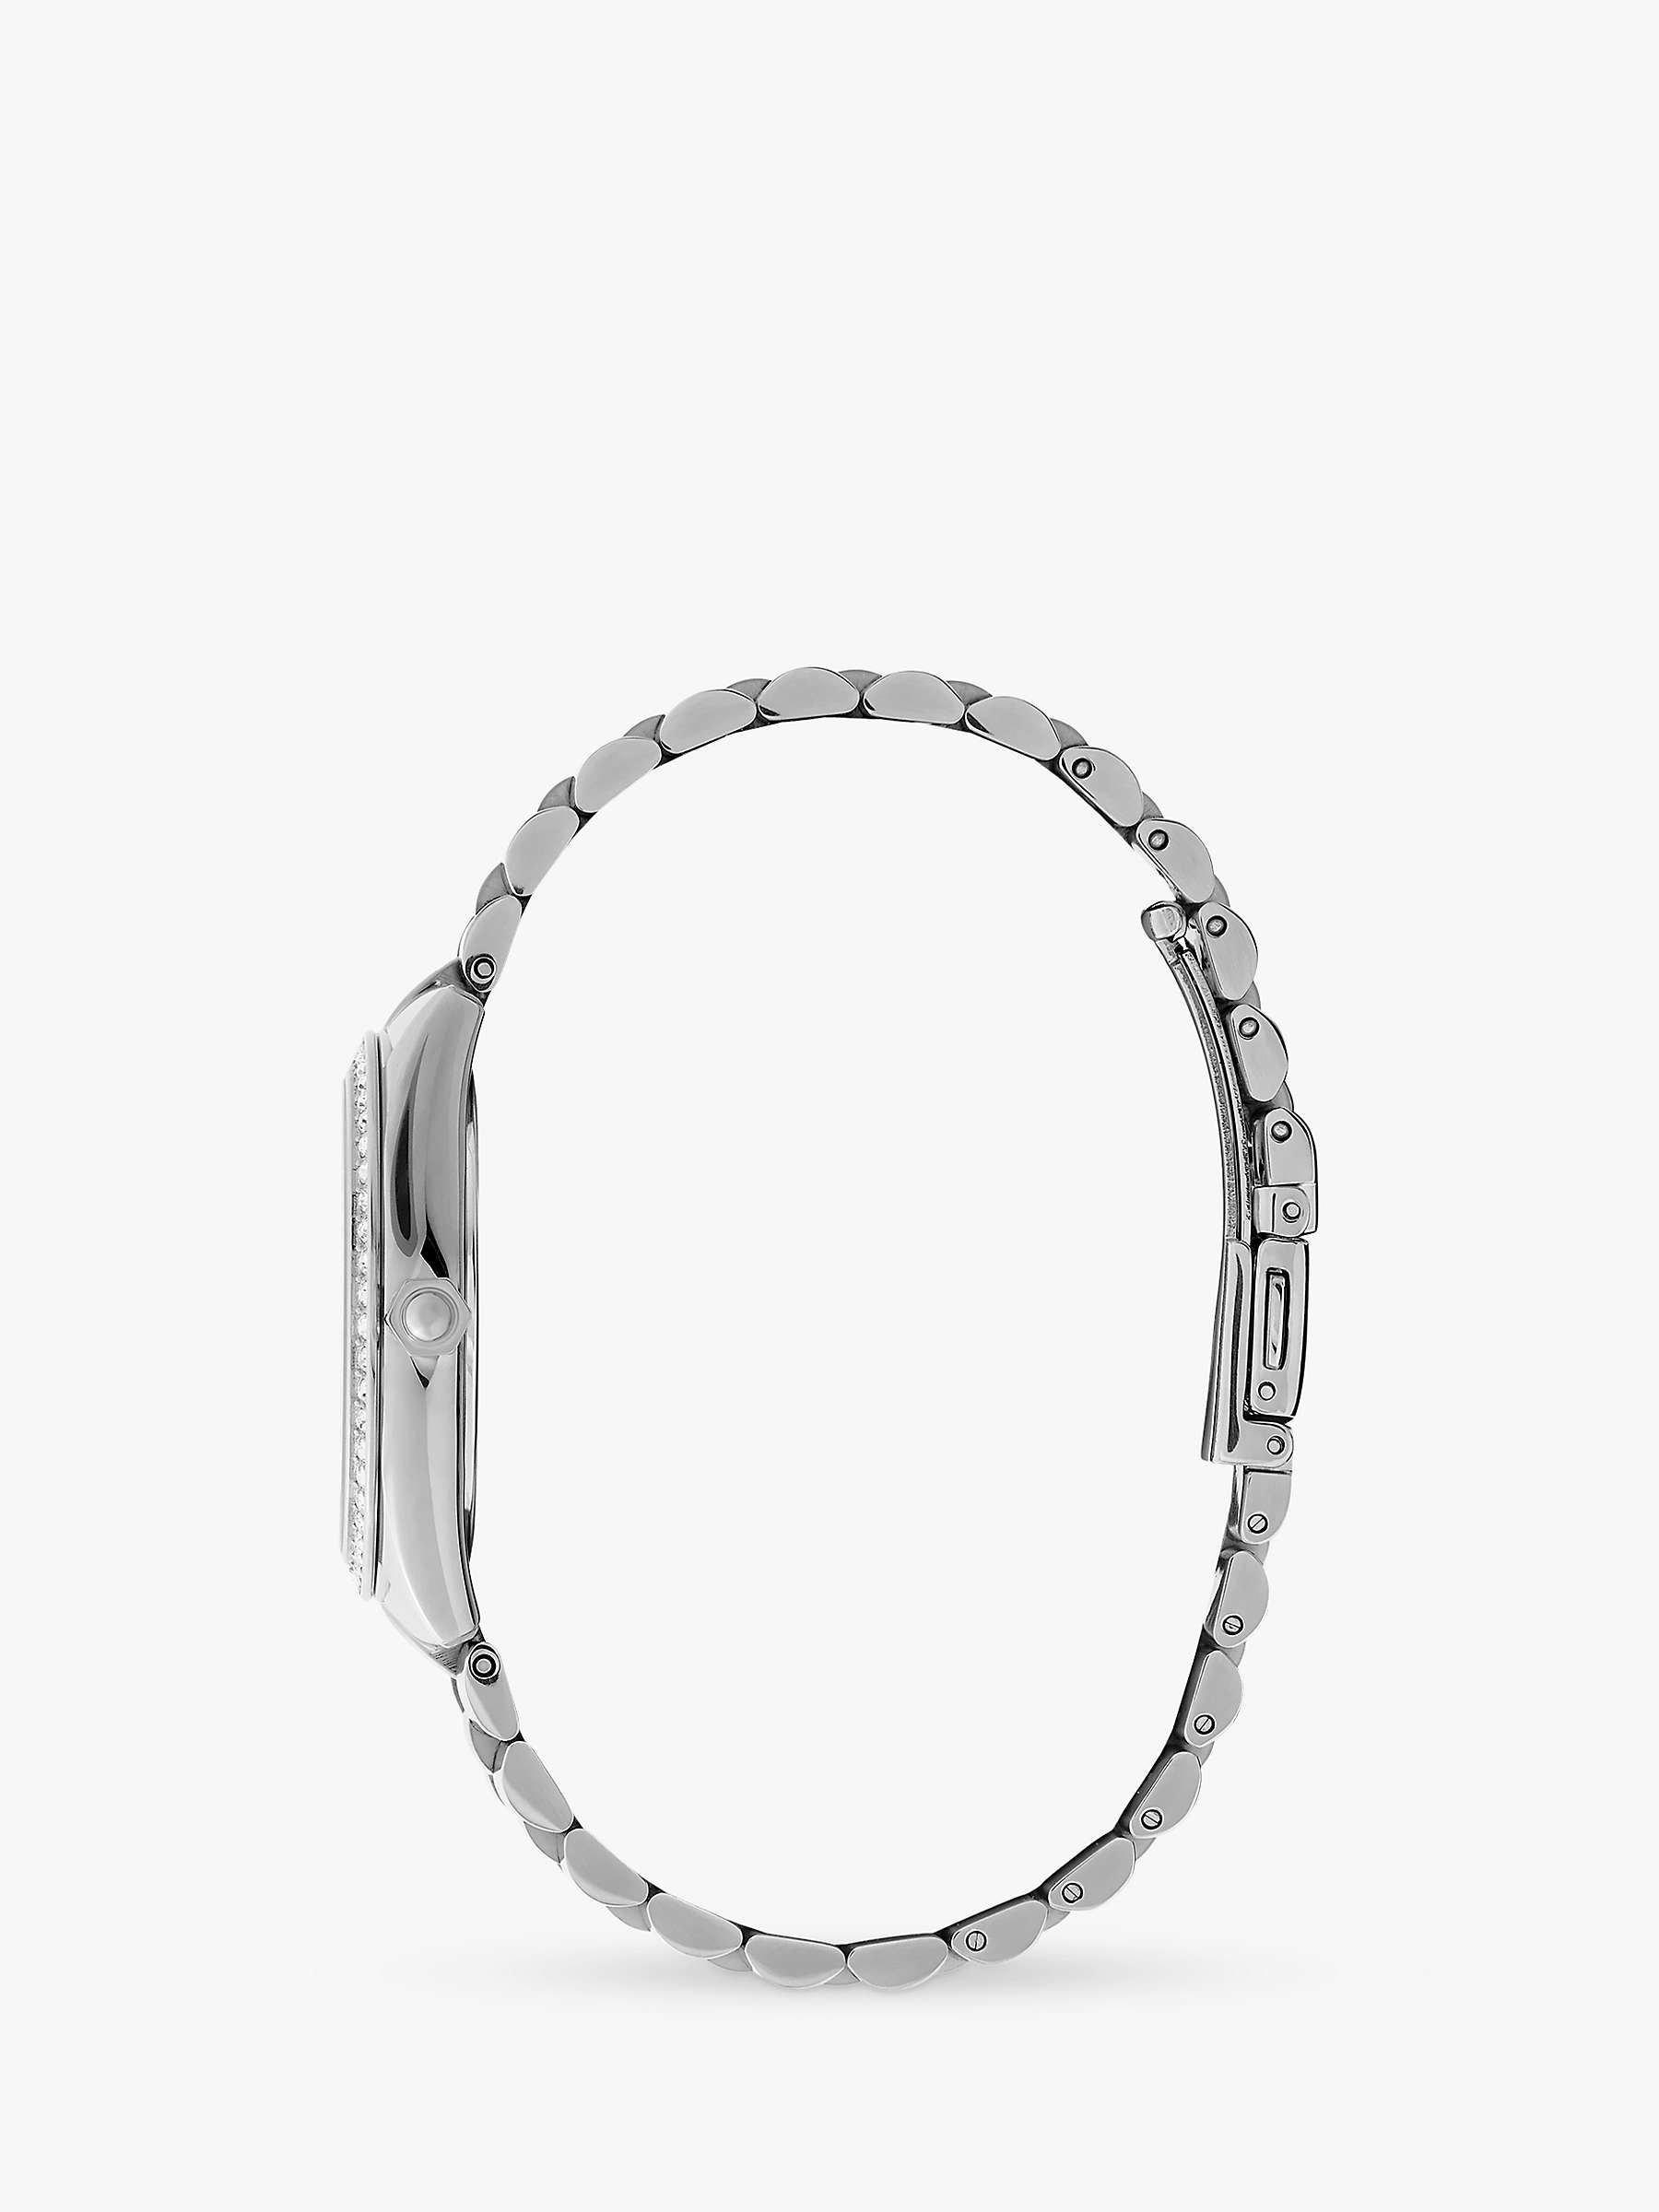 Buy Olivia Burton Women's Crystal Bezel Watch, Silver/Rose Gold Online at johnlewis.com